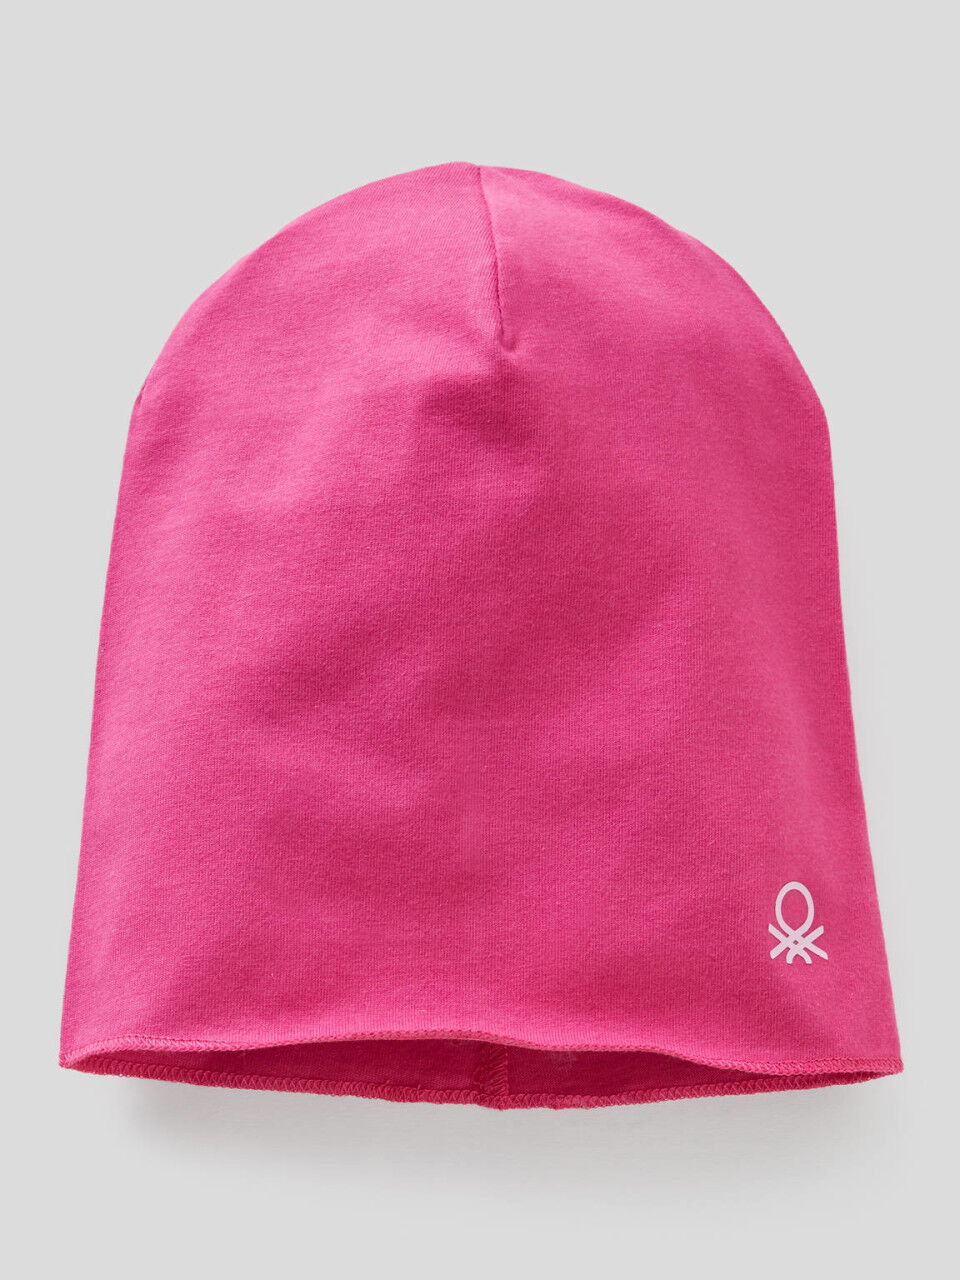 6-9 Girl hat Benetton winter 1-2 10-11-12 y wool cashmere BNWT pink red grey